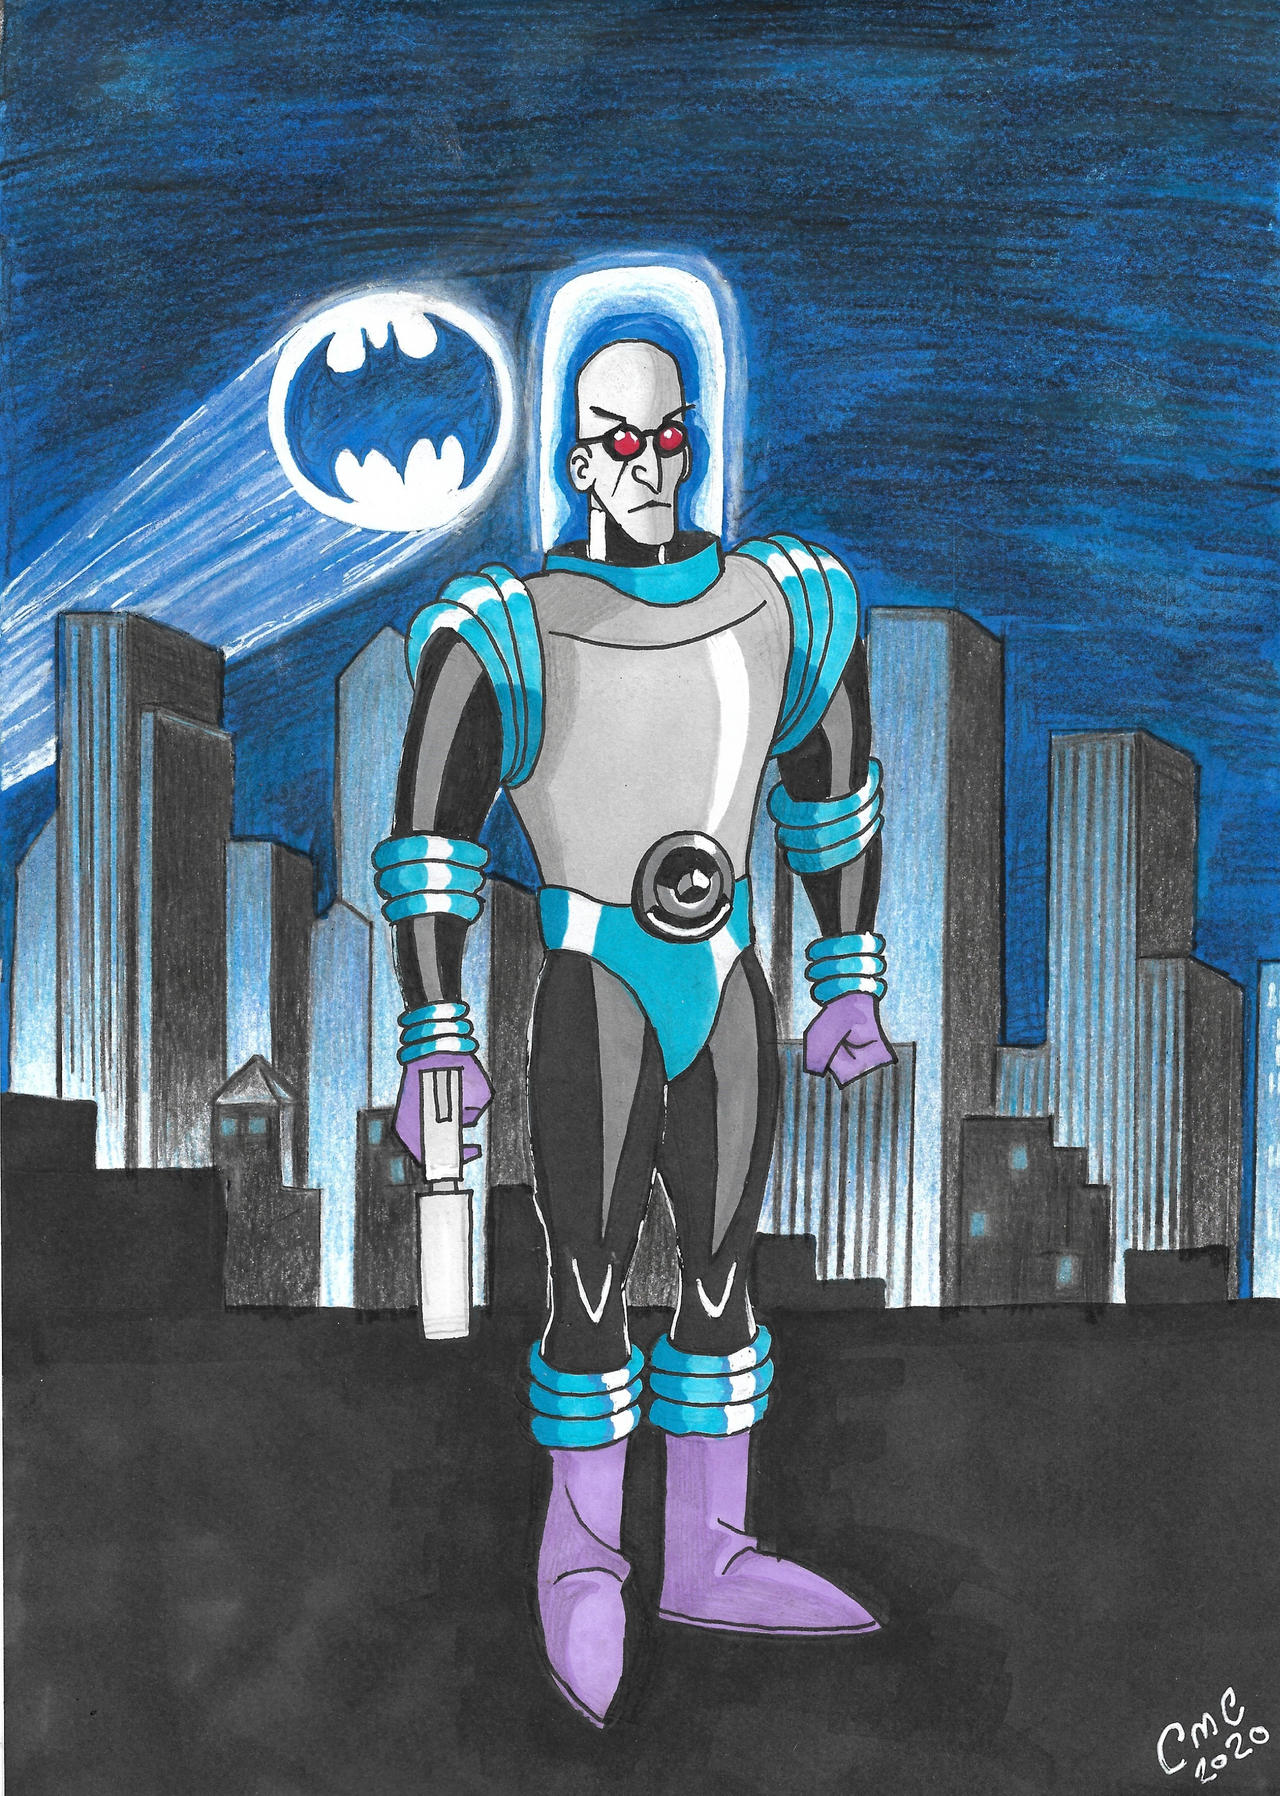 Mr Freeze (Batman Animated Series) by ChrisMilesC on DeviantArt